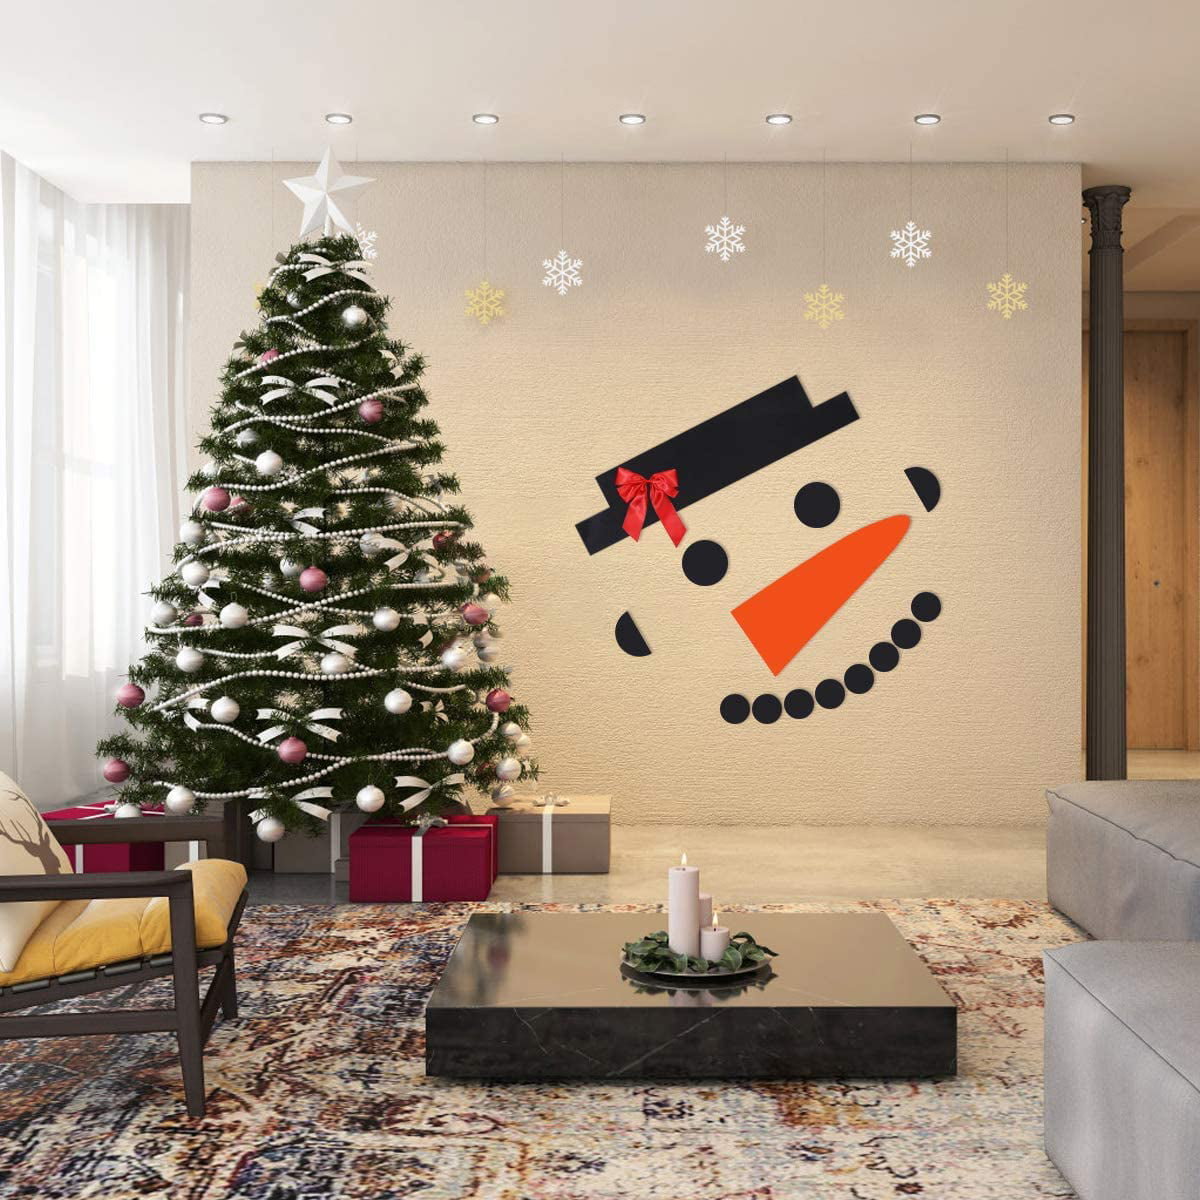 DIY Non‑Woven Christmas Snowman Decoration Set for Outdoor Garage Door Window Holiday Decor Yosoo Snowman Decoration 